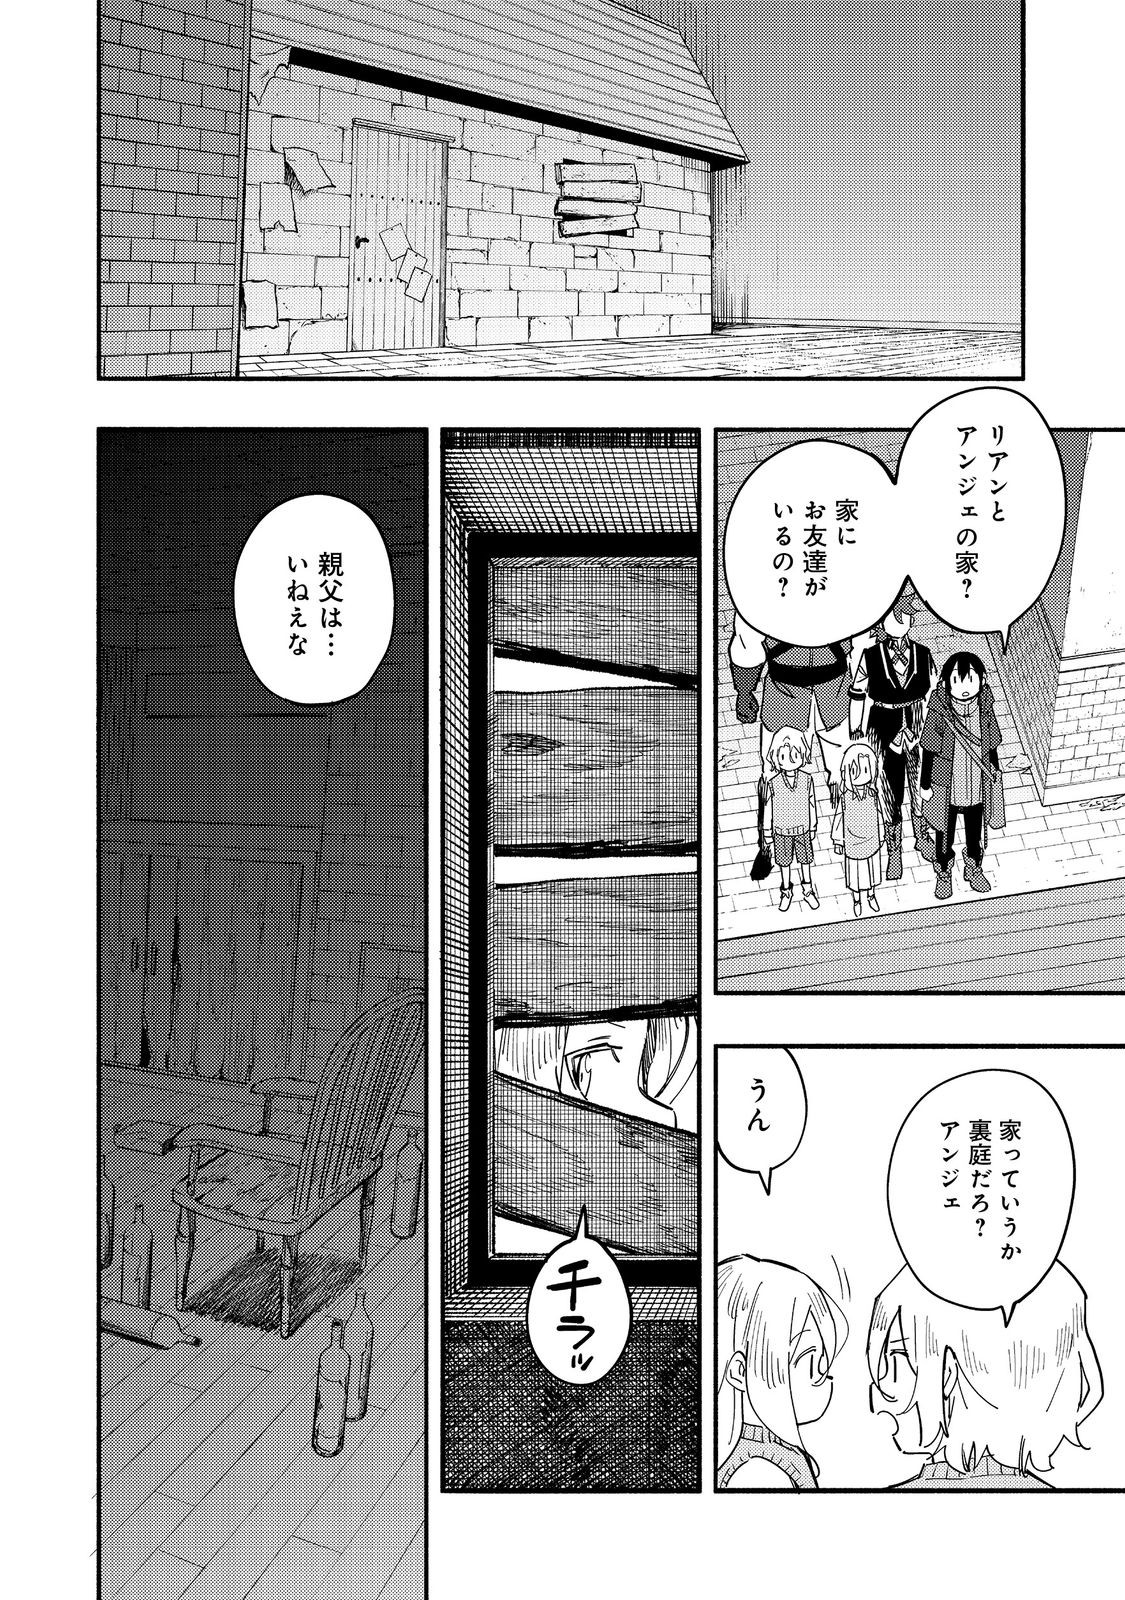 Kyou mo E ni Kaita Mochi ga Umai - Chapter 27 - Page 4